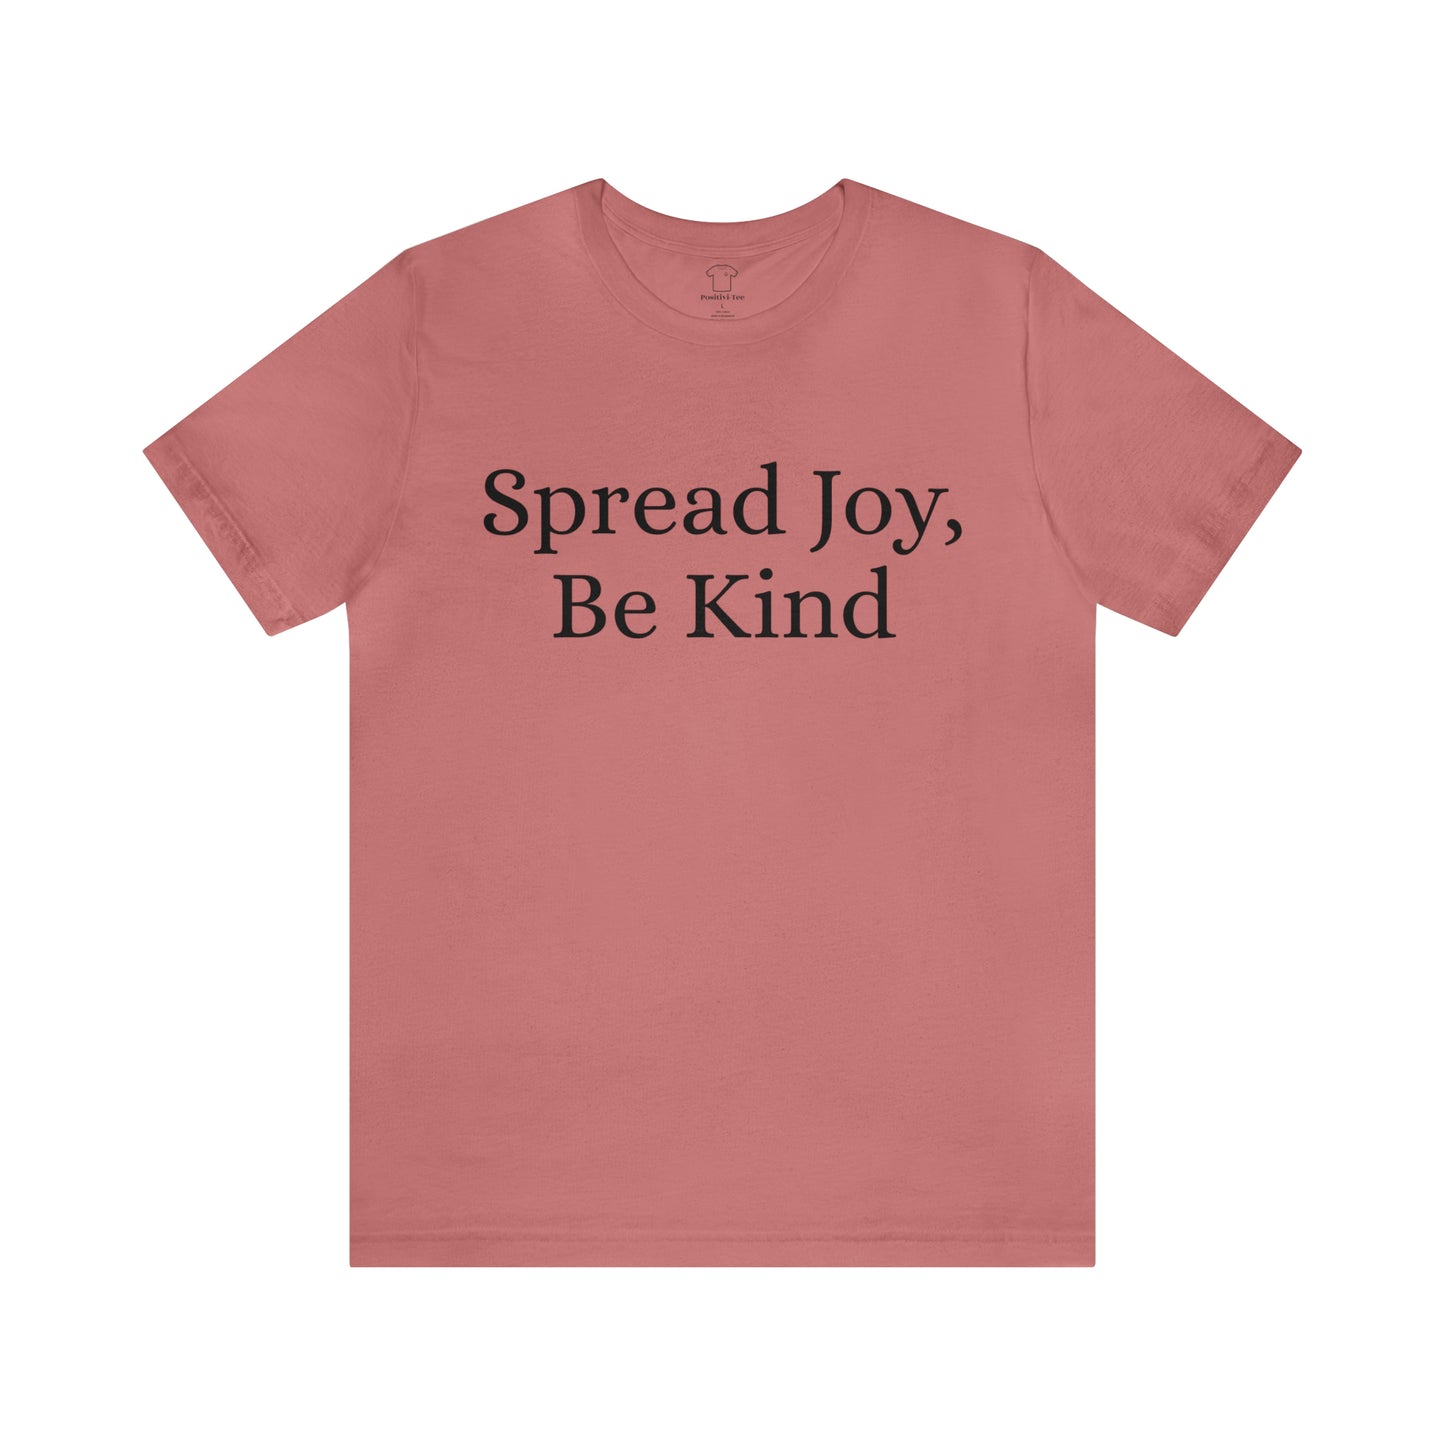 Spread Joy, Be Kind